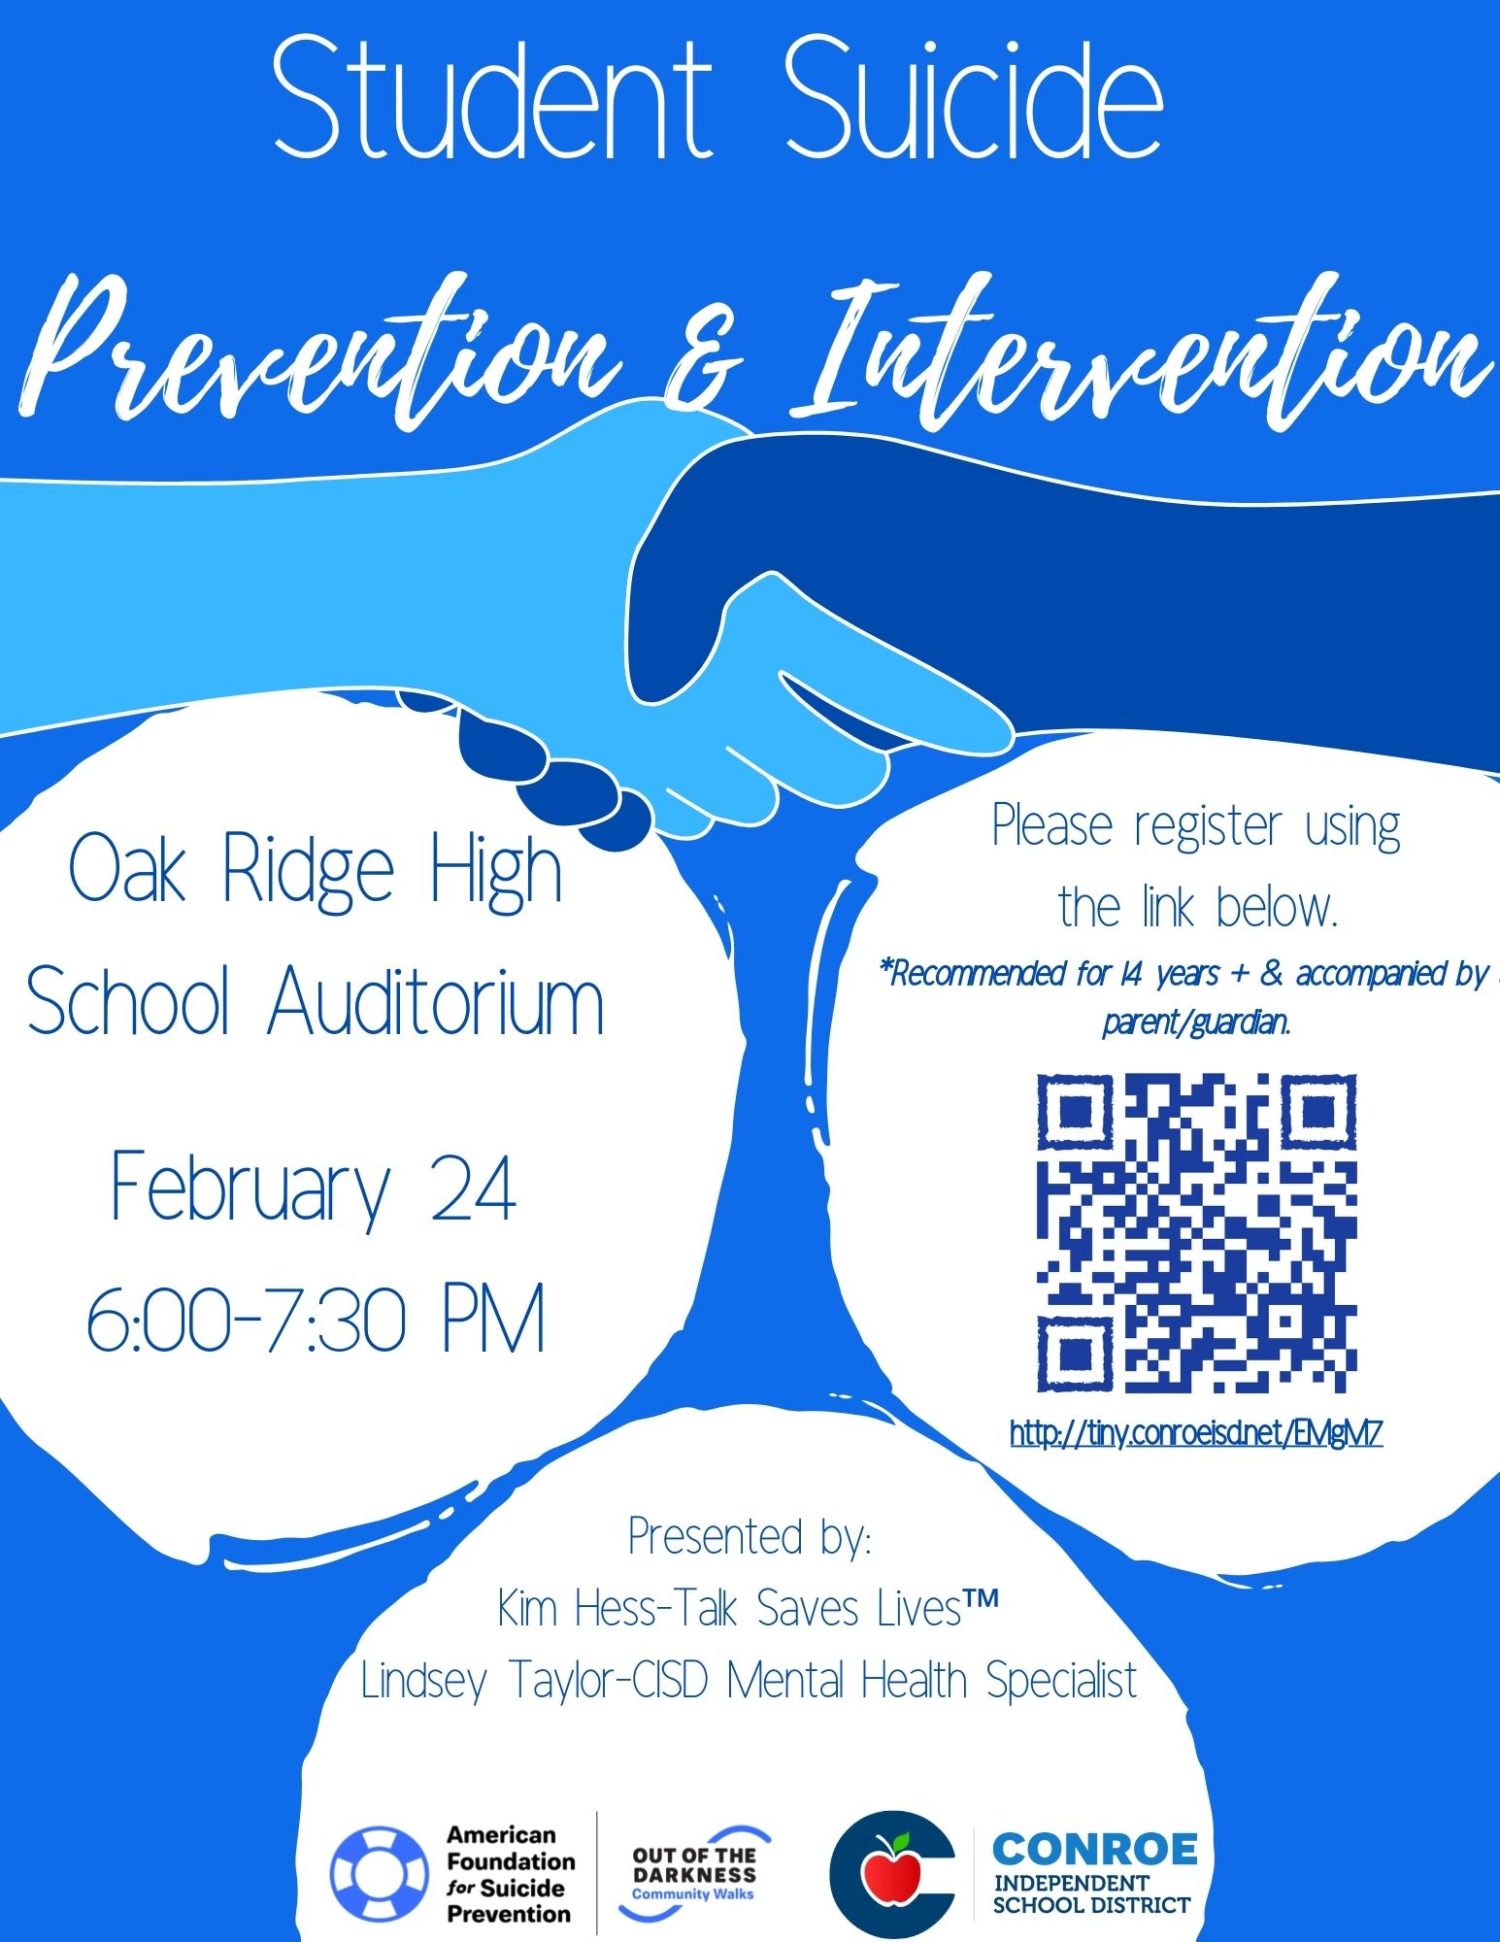 Student Suicide Prevention & Intervention